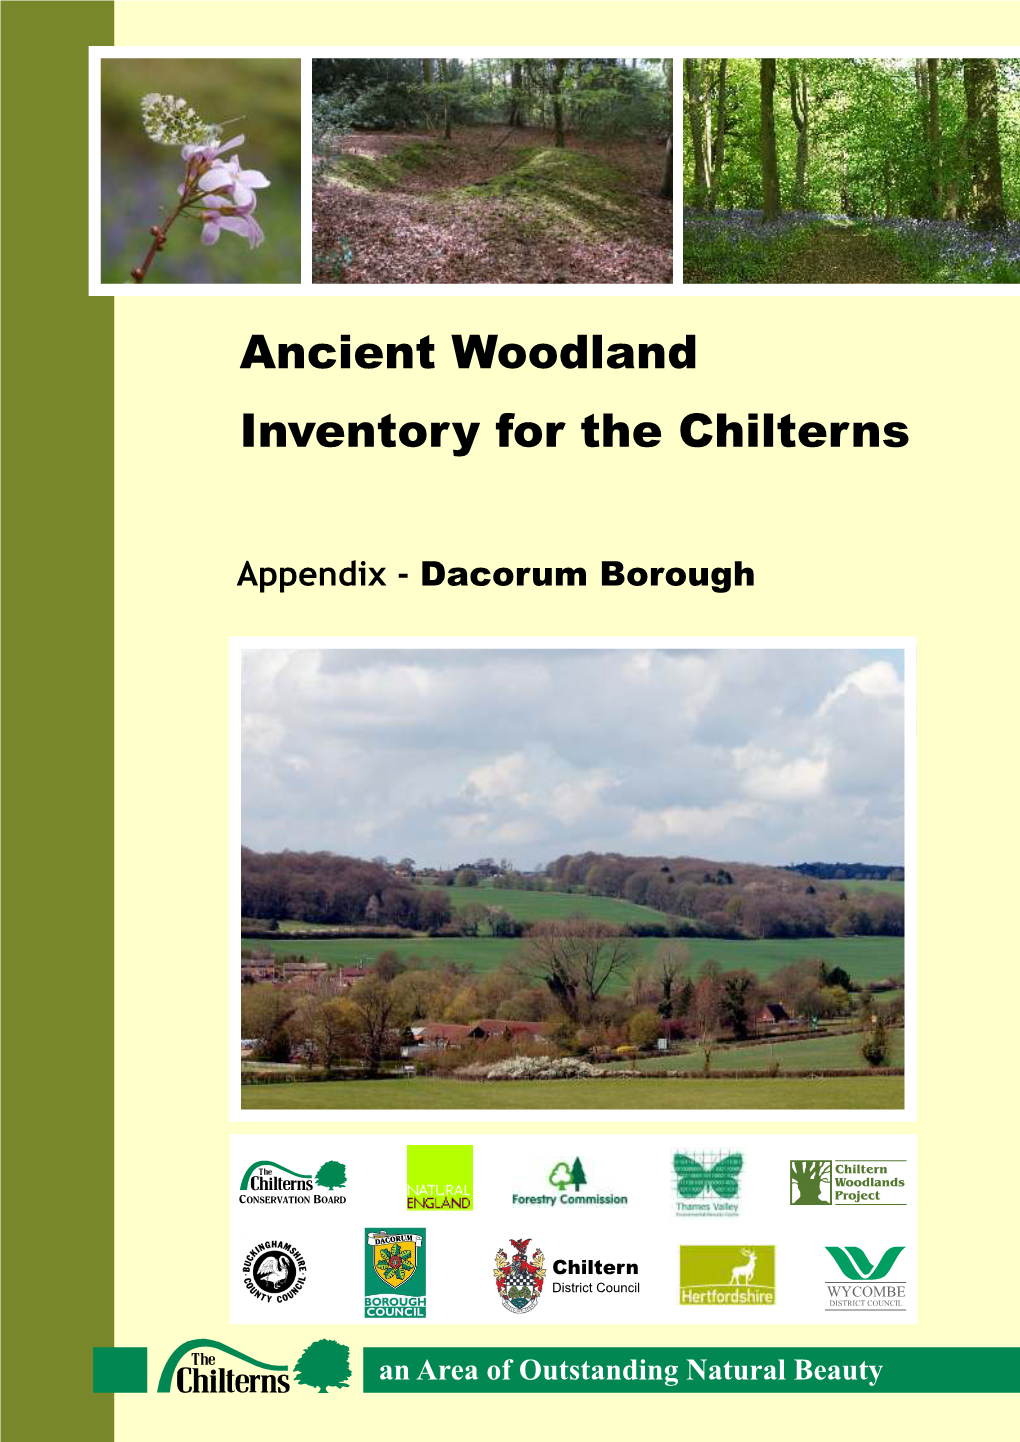 Chilterns Ancient Woodland Survey Appendix: Dacorum Borough